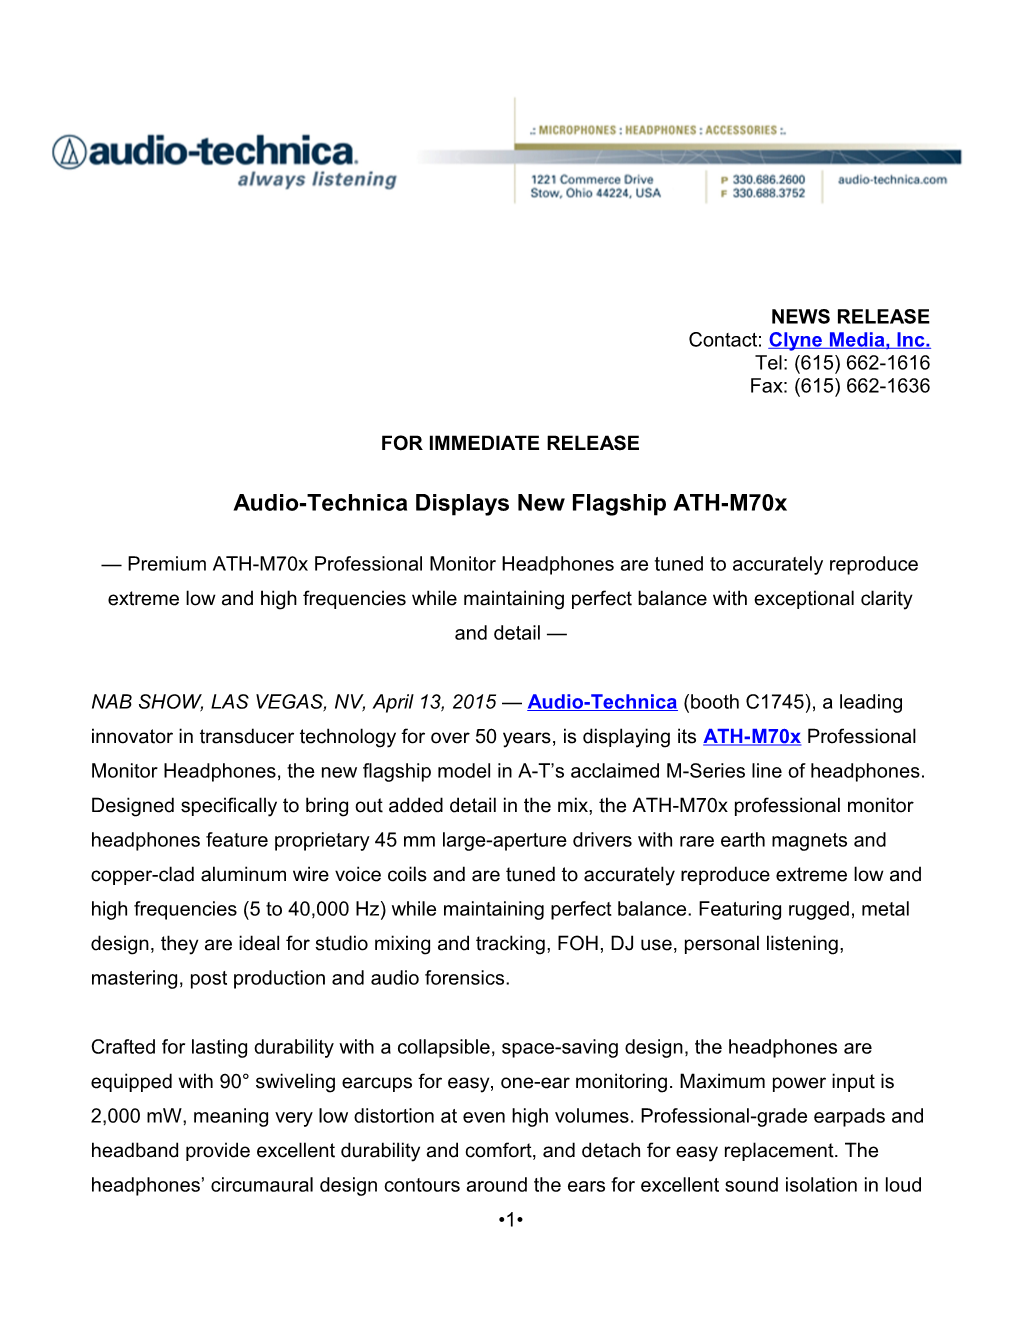 Audio-Technica Displays New Flagship ATH-M70x